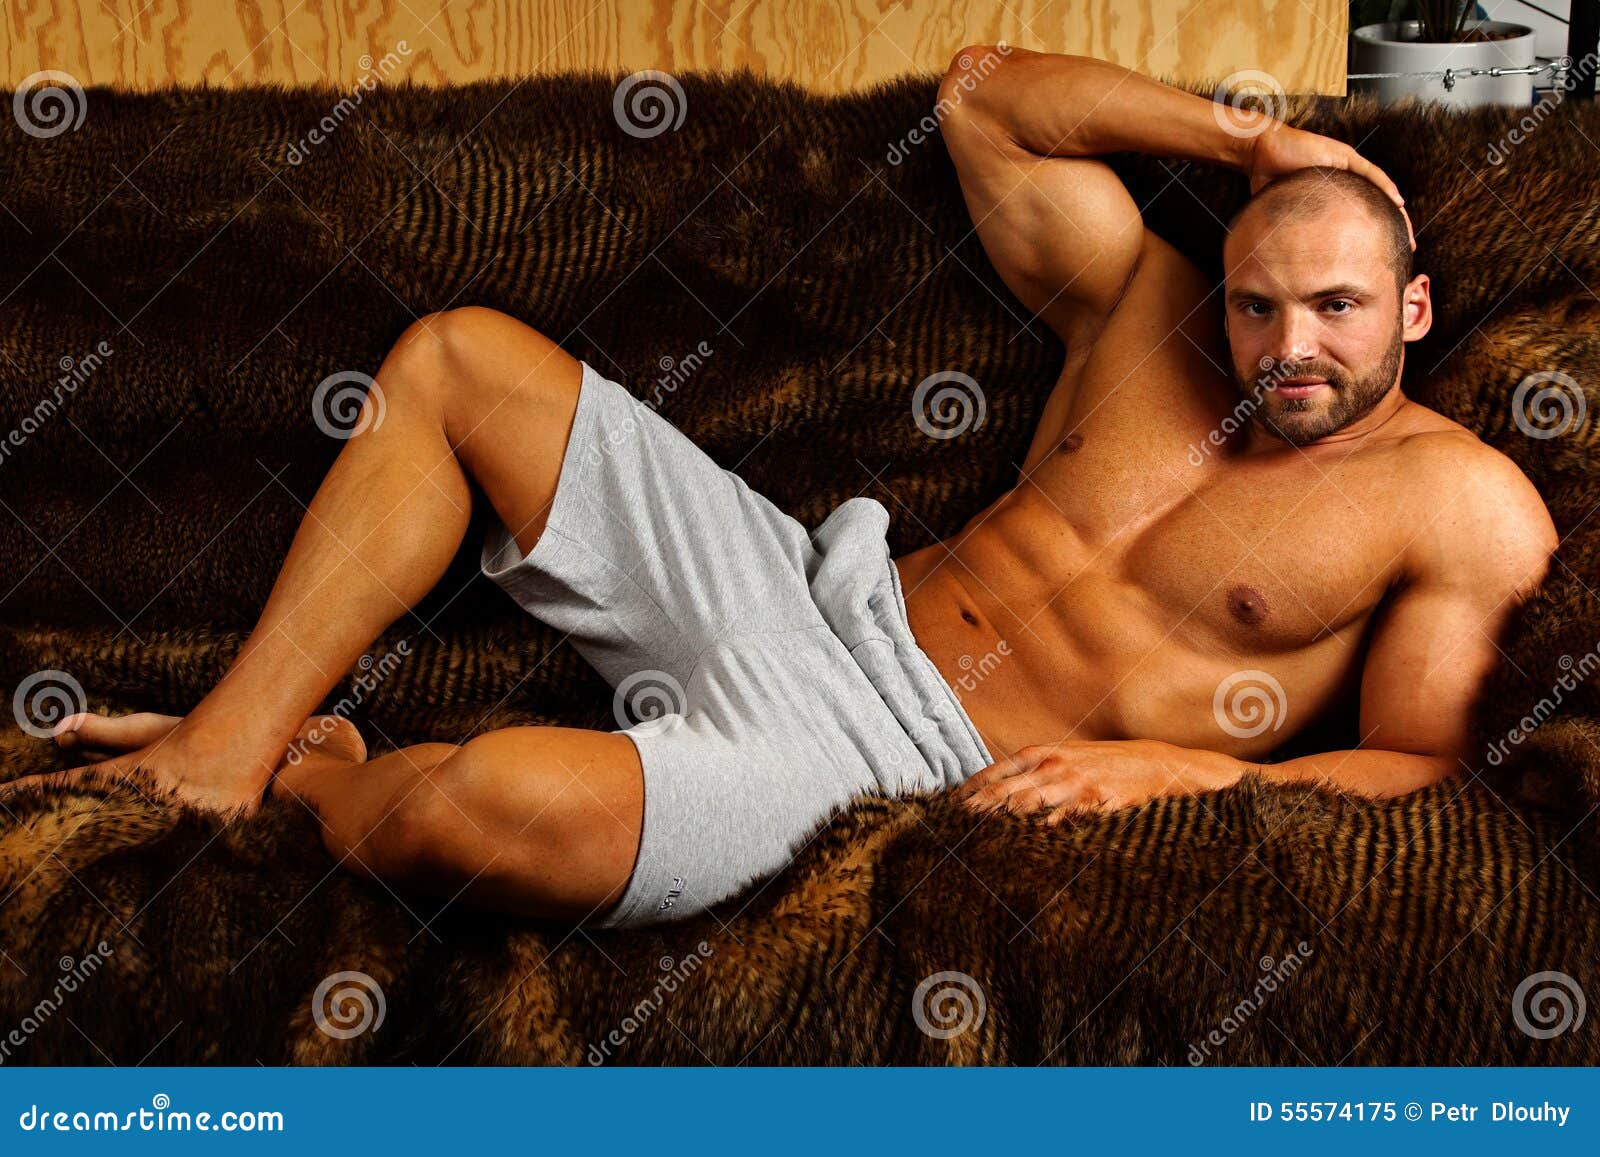 Мужчина сидит раздвинув ноги. Накаченный мужик на диване. Накаченный мужчина лежит. Мускулистый мужчина лежит. Мускулистый парень в кровати.